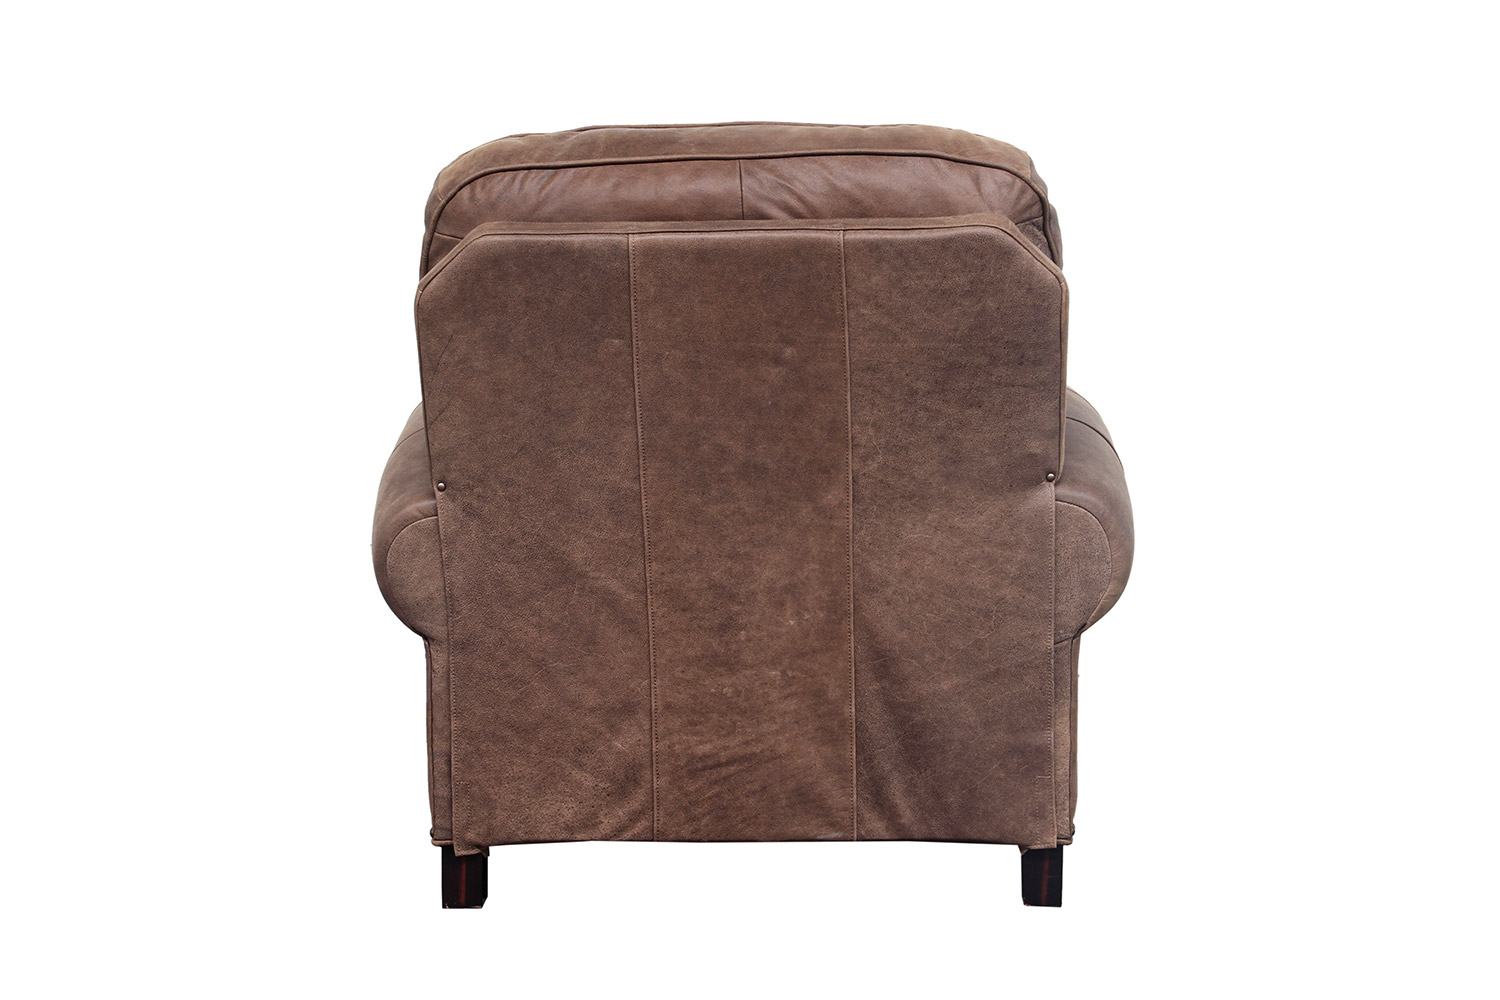 Barcalounger Longhorn Recliner Chair - Sanded Dark Bomber/Top Grain Leather